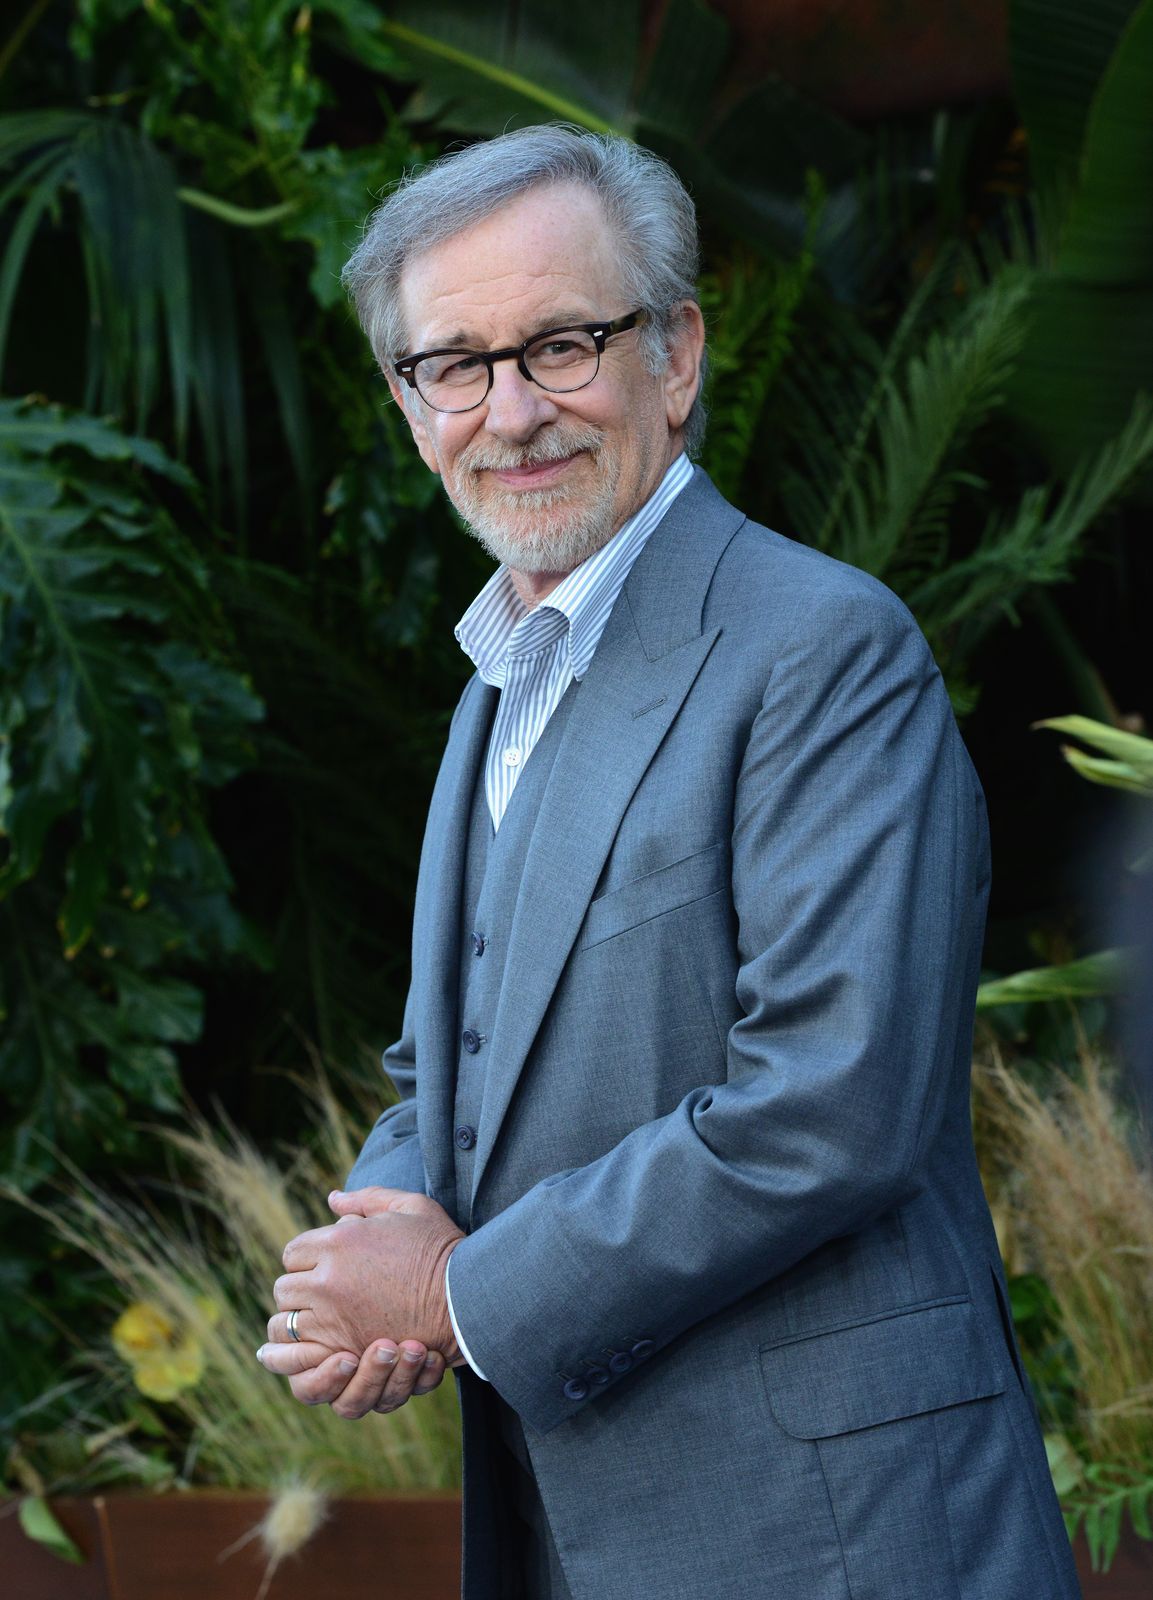 Steven Spielberg at the premiere of "Jurassic World: Fallen Kingdom" on June 12, 2018, in Los Angeles, California | Photo: Albert L. Ortega/Getty Images